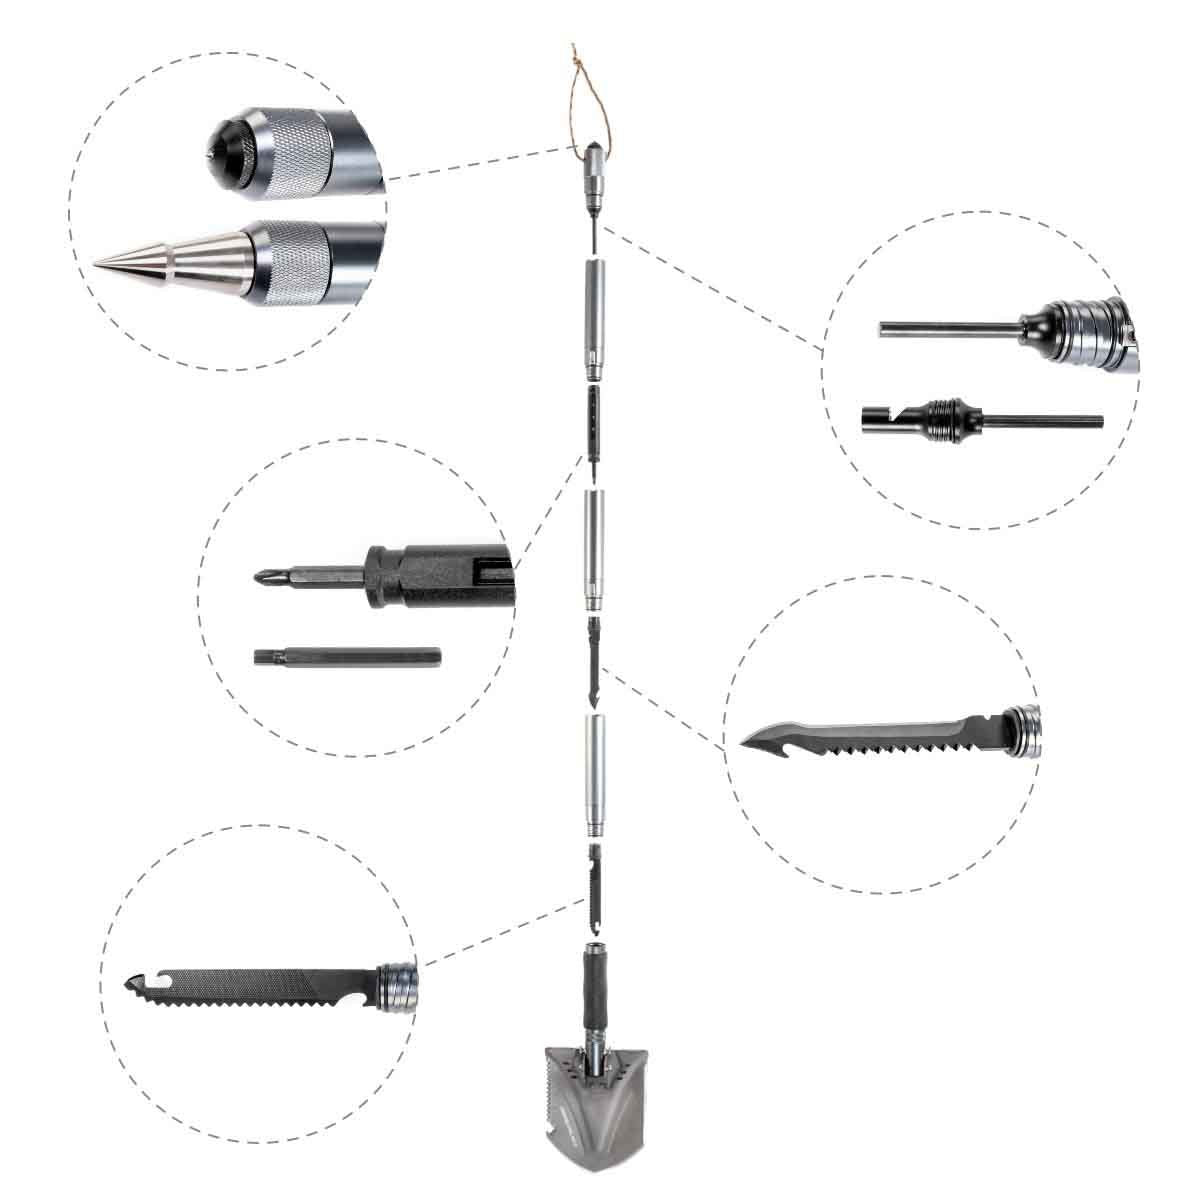 Multifunctional 35-inch Assembling Survival Shovel Kit for Fishing, Hunting, Outdoor